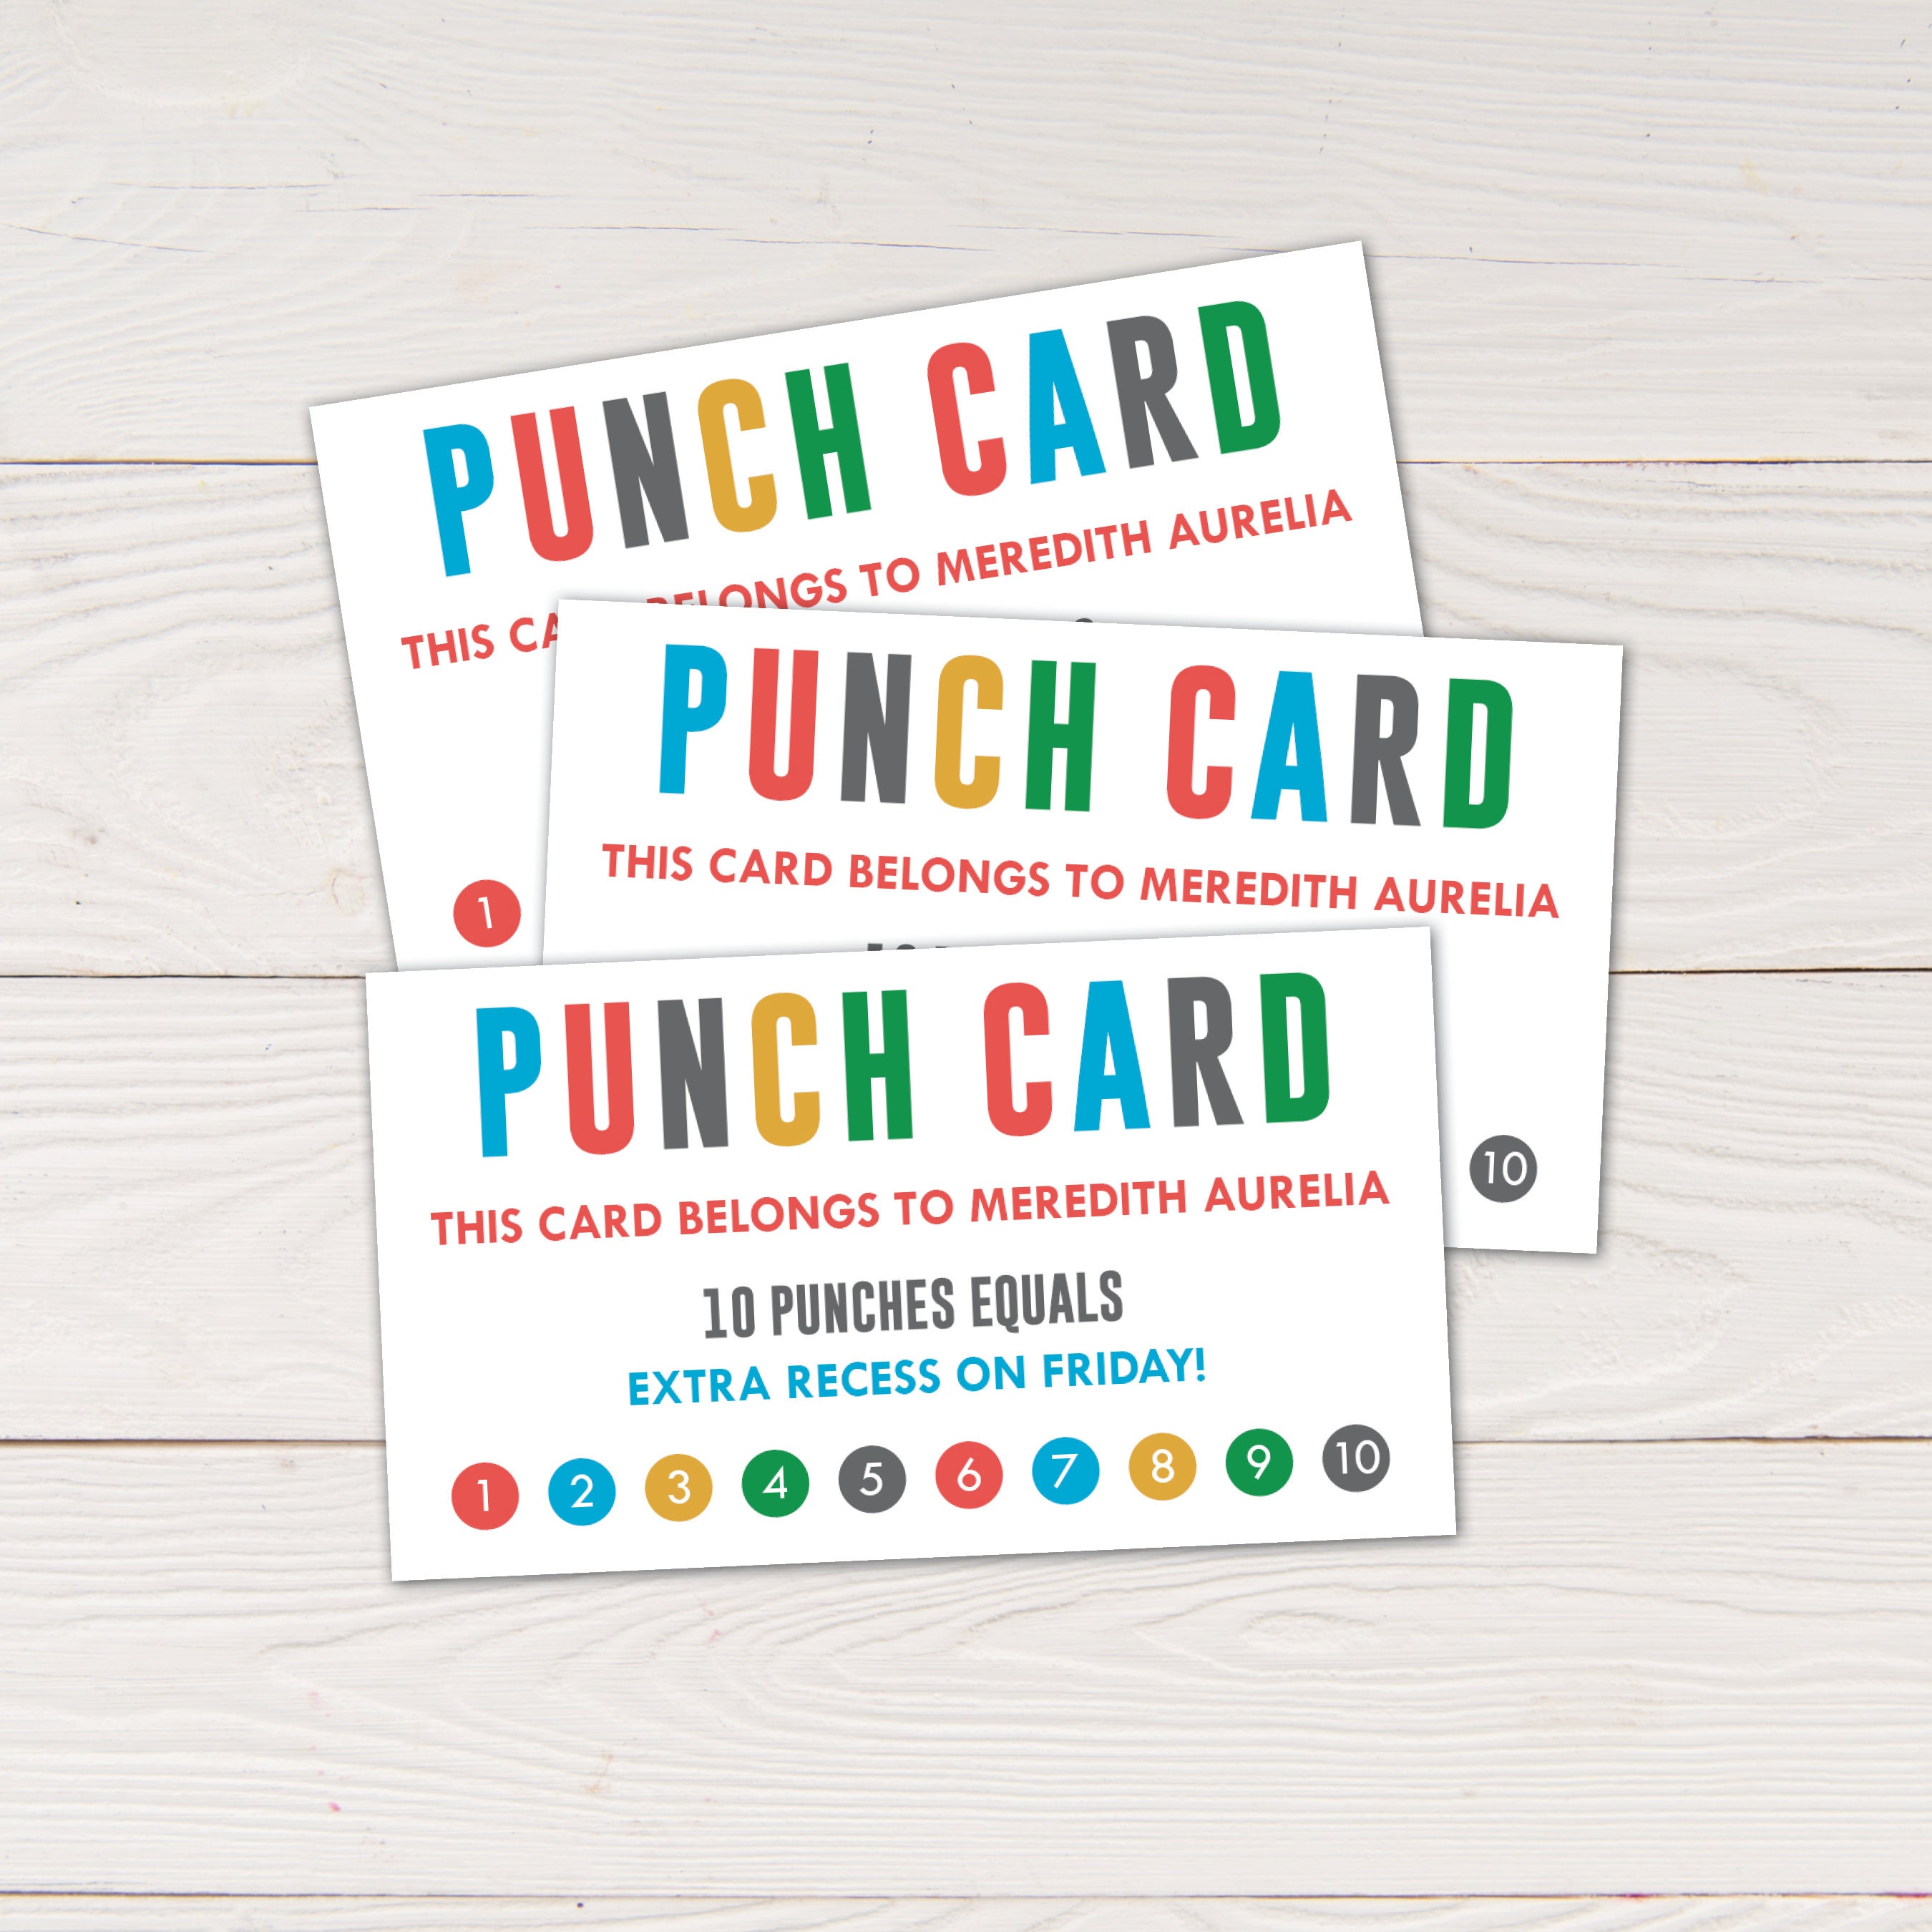 Editable Reward Punch Cards – My WordPress